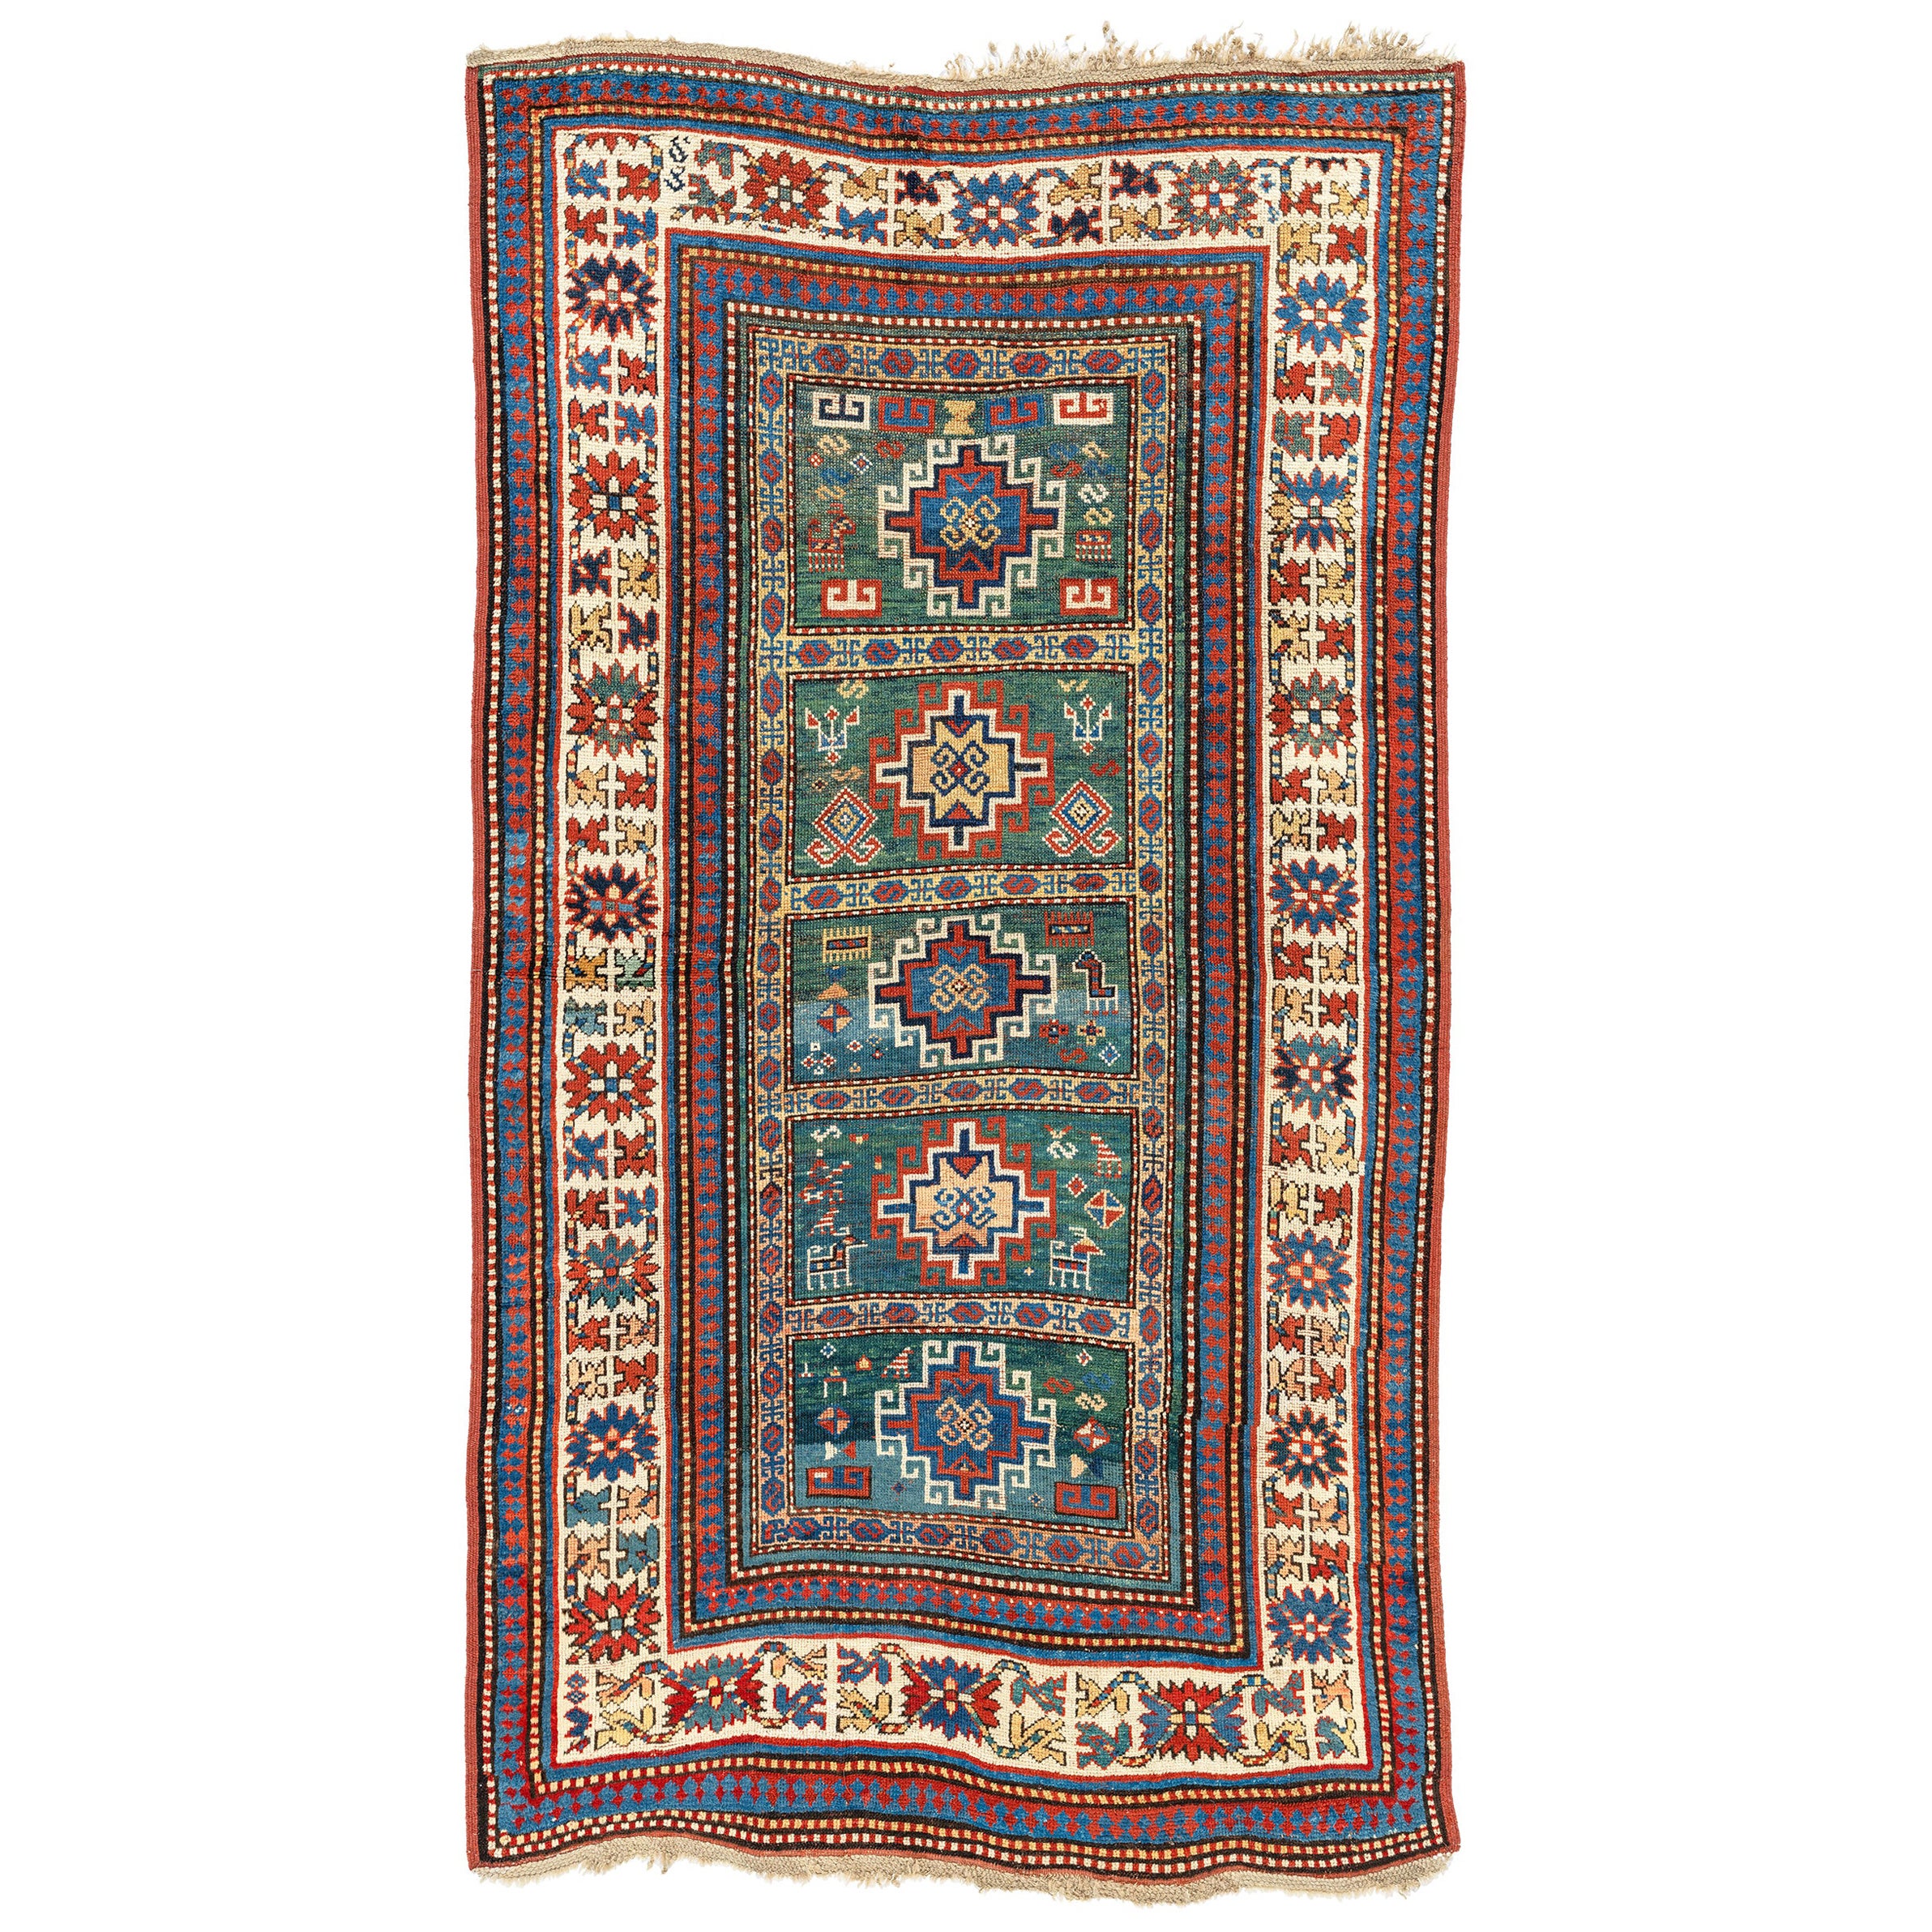 Antiker Kazak-Teppich, spätes 19. Jahrhundert